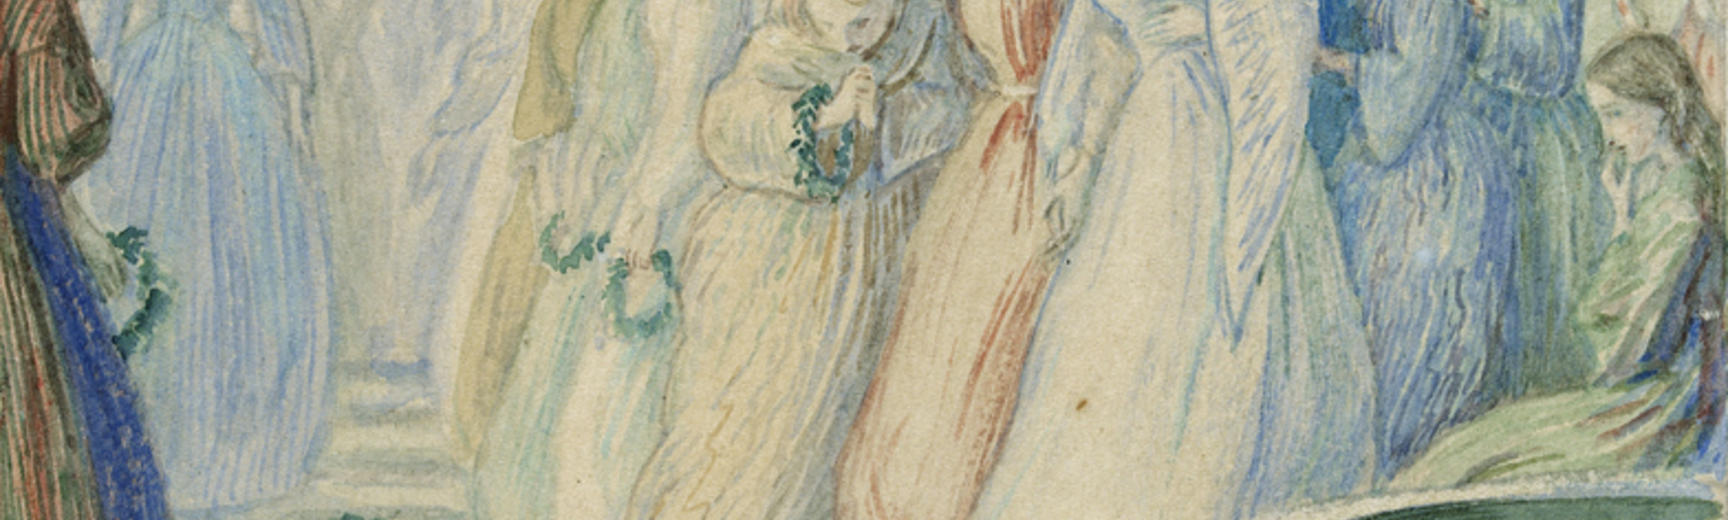 John Everett Millais, Iphis and Anaxarete